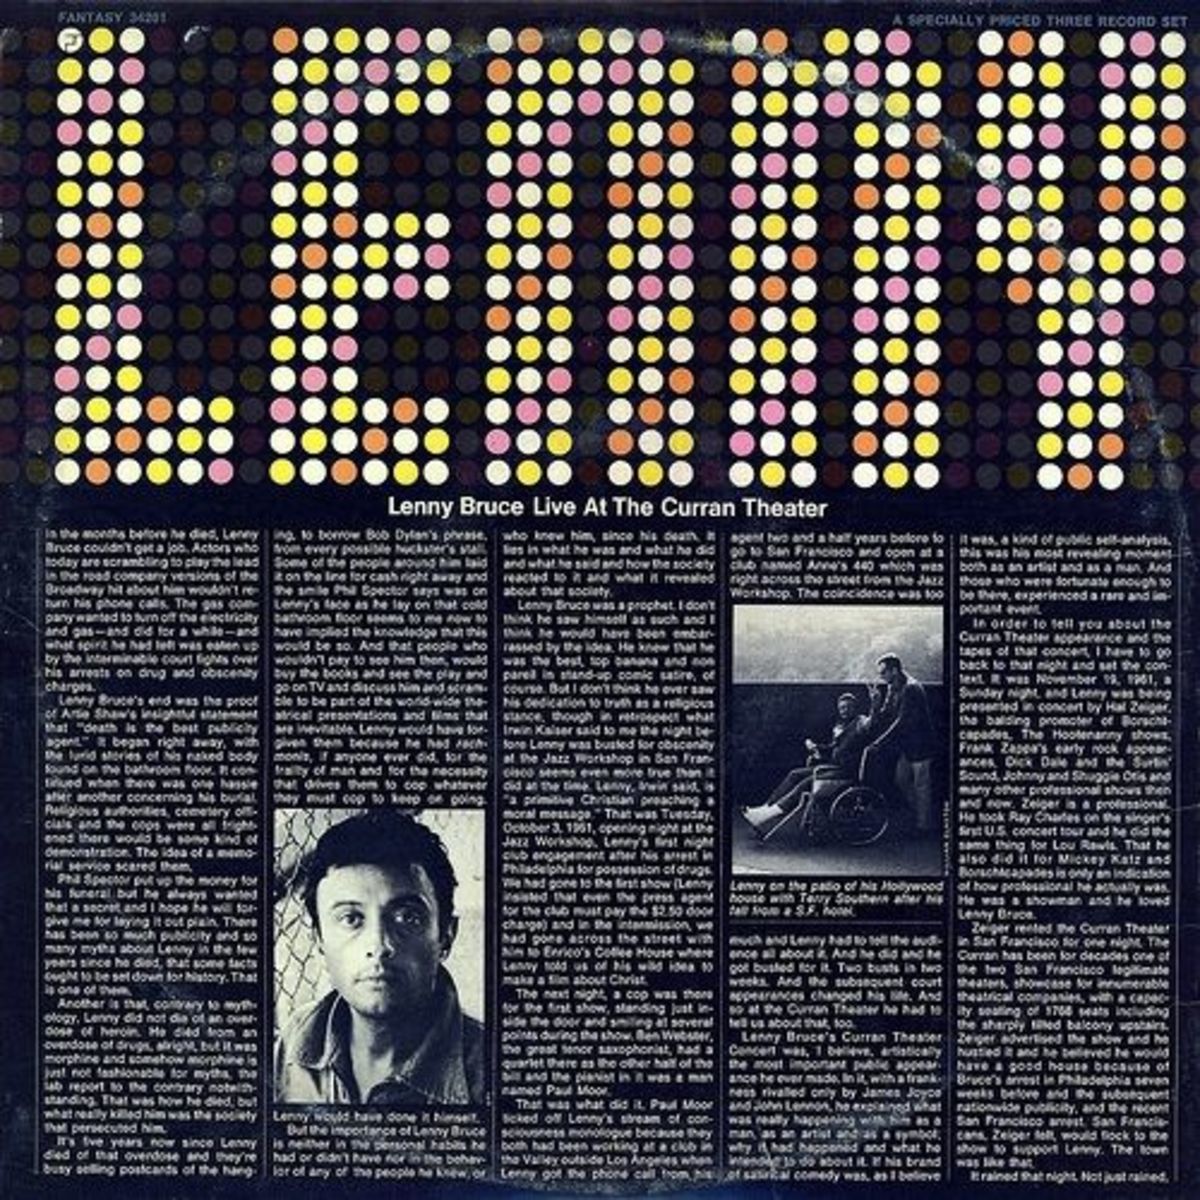 Lenny Bruce "Live At The Curran Theater" Fantasy 34201 3 12" LP Vinyl Record Box Set, US Pressing  (1971)  1961 Performance